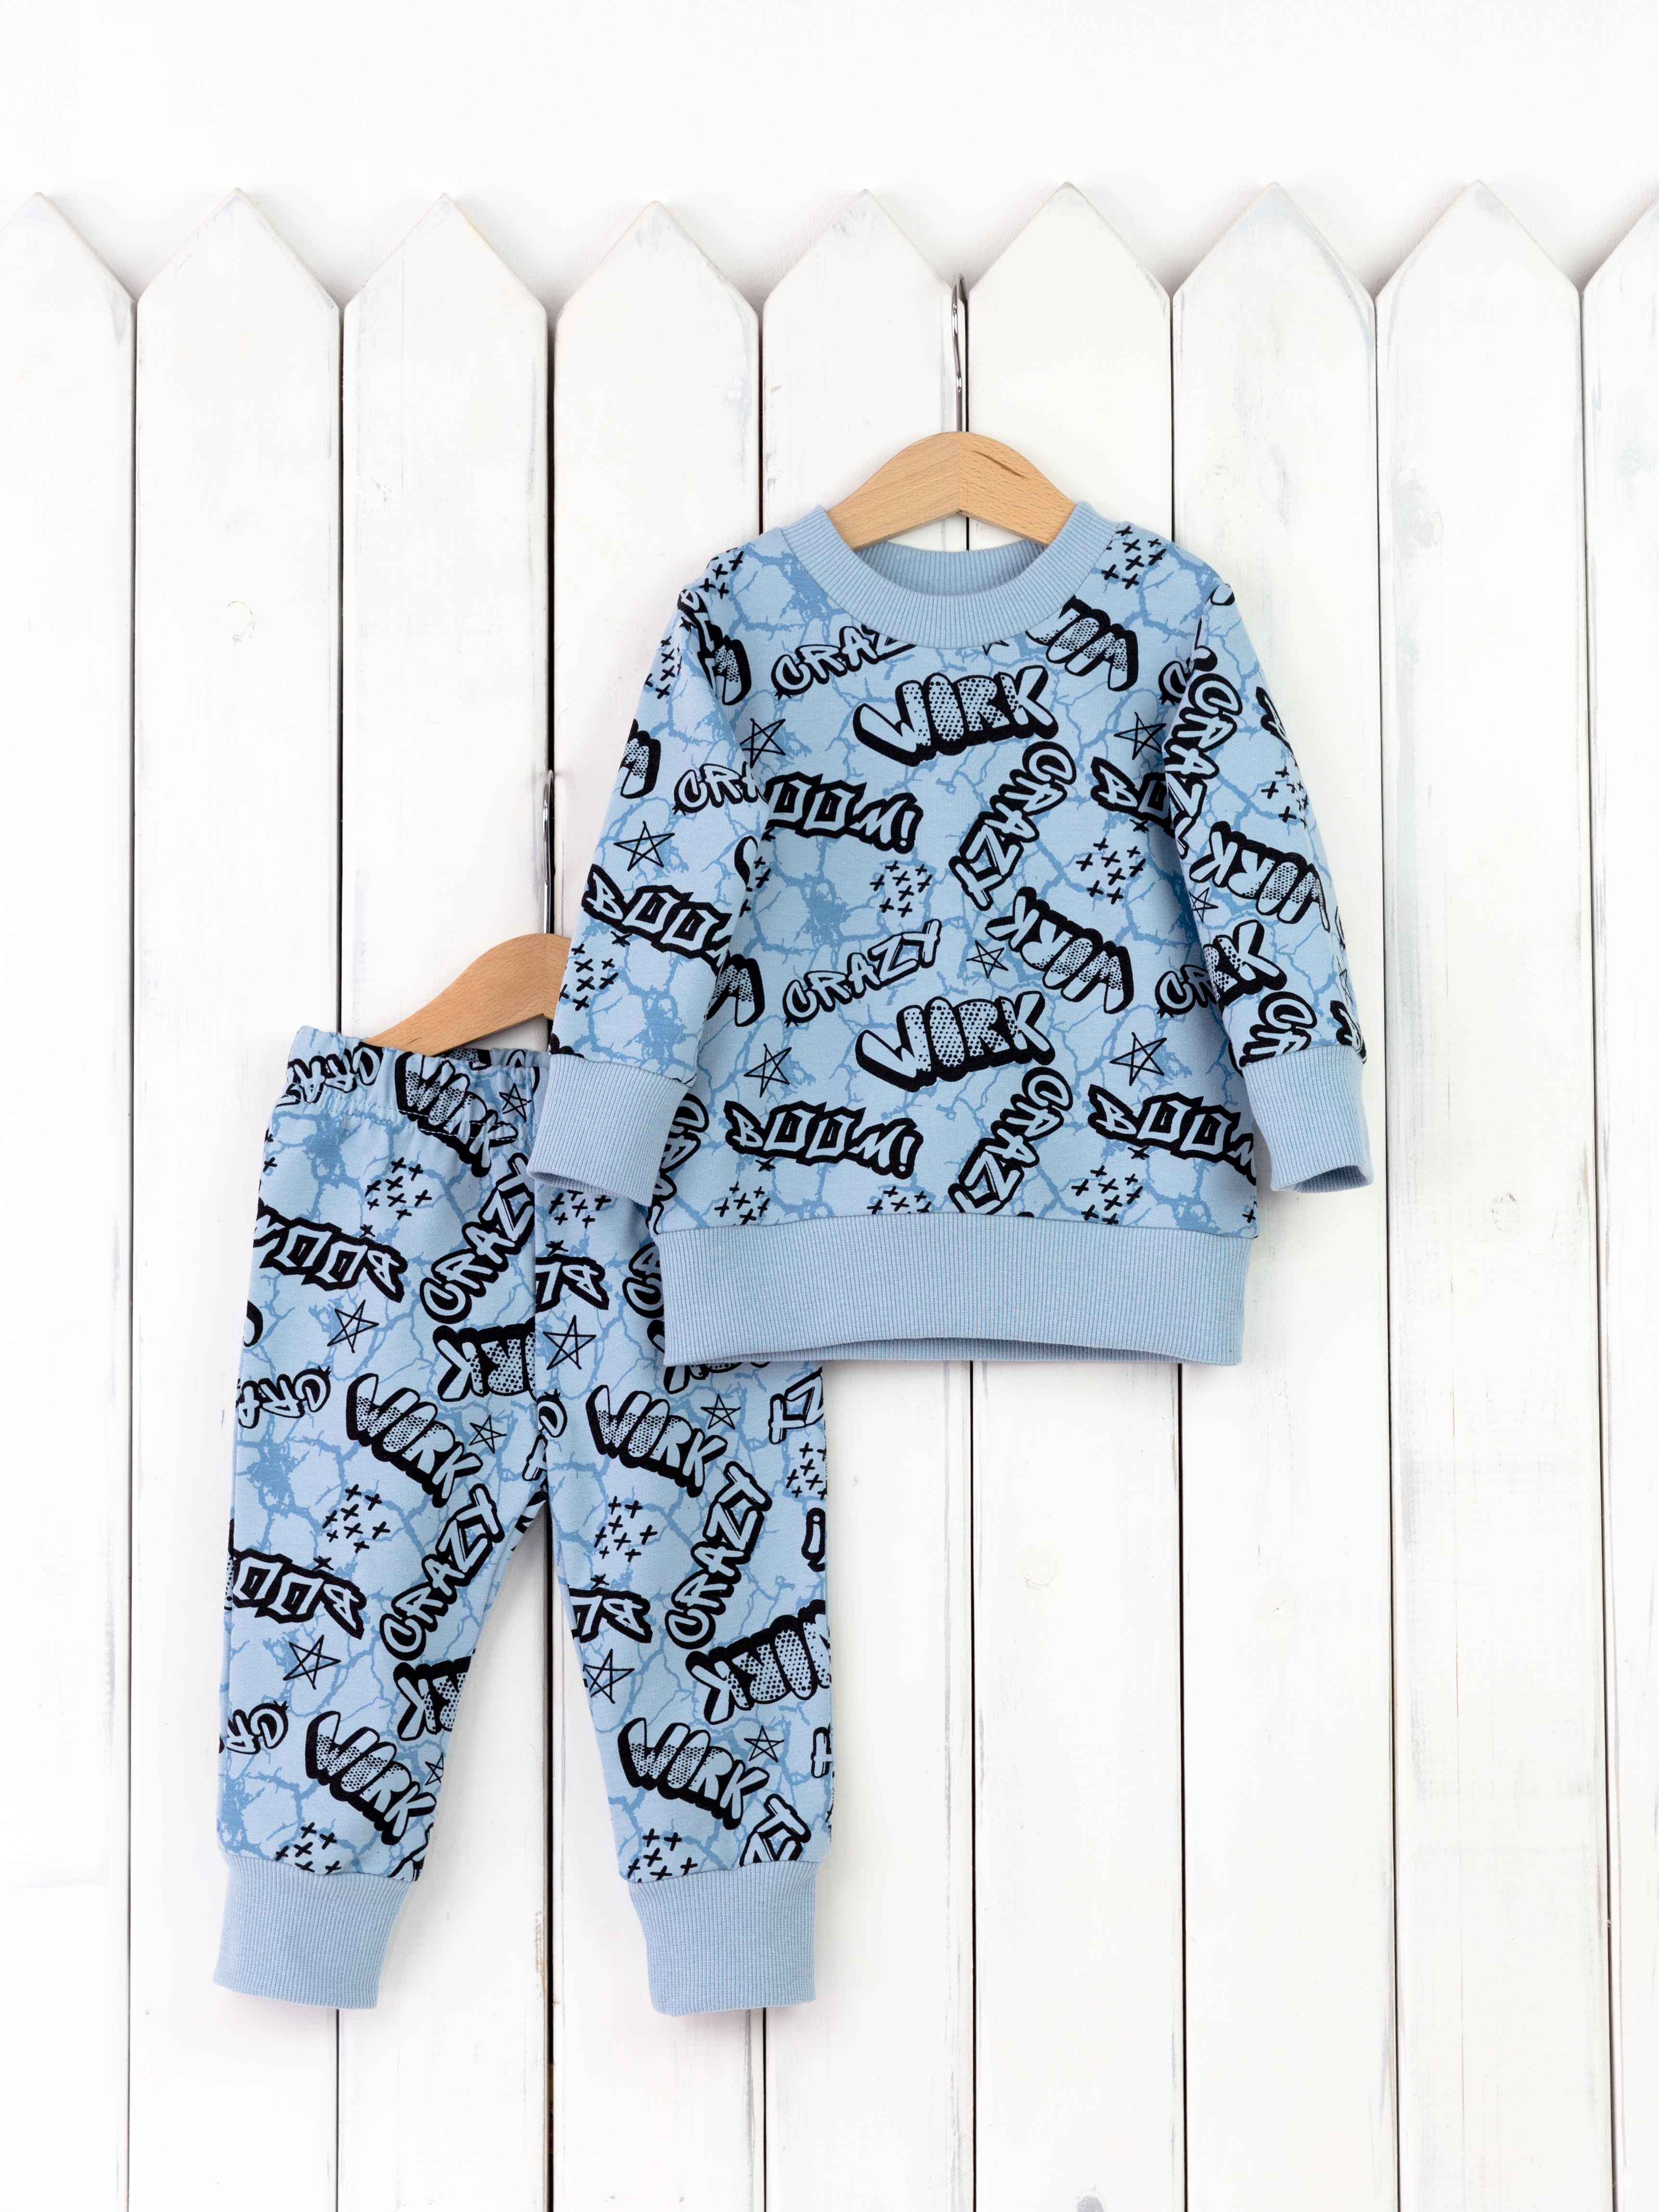 КД402/6-Ф Комплект детский р.86 джемпер+брюки/надписи на голубом Бэби Бум - Омск 